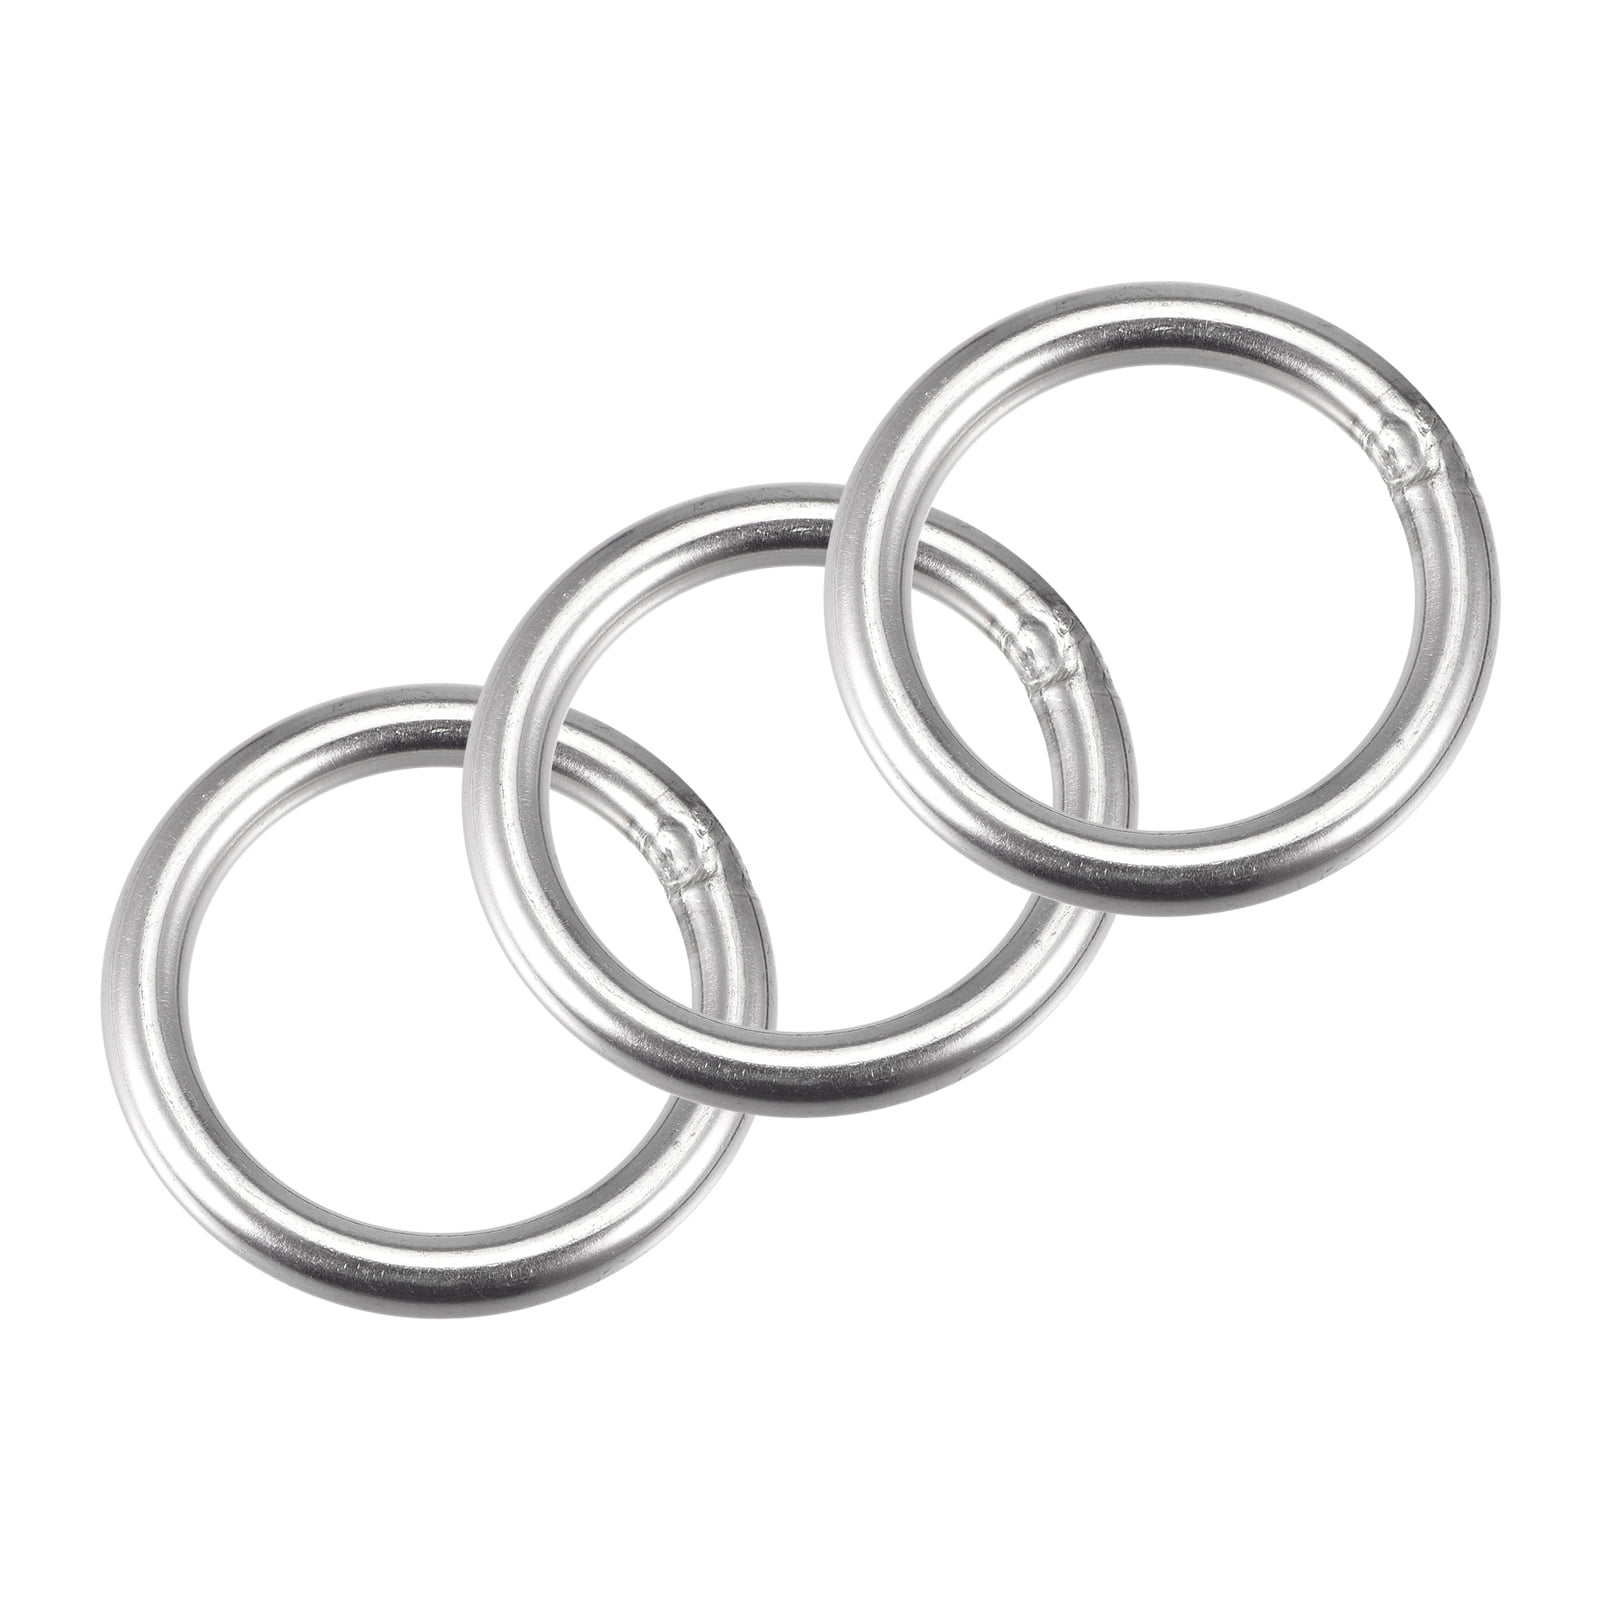 12 Packs: 3 ct. (36 total) Silver Ring Blanks by Bead Landing